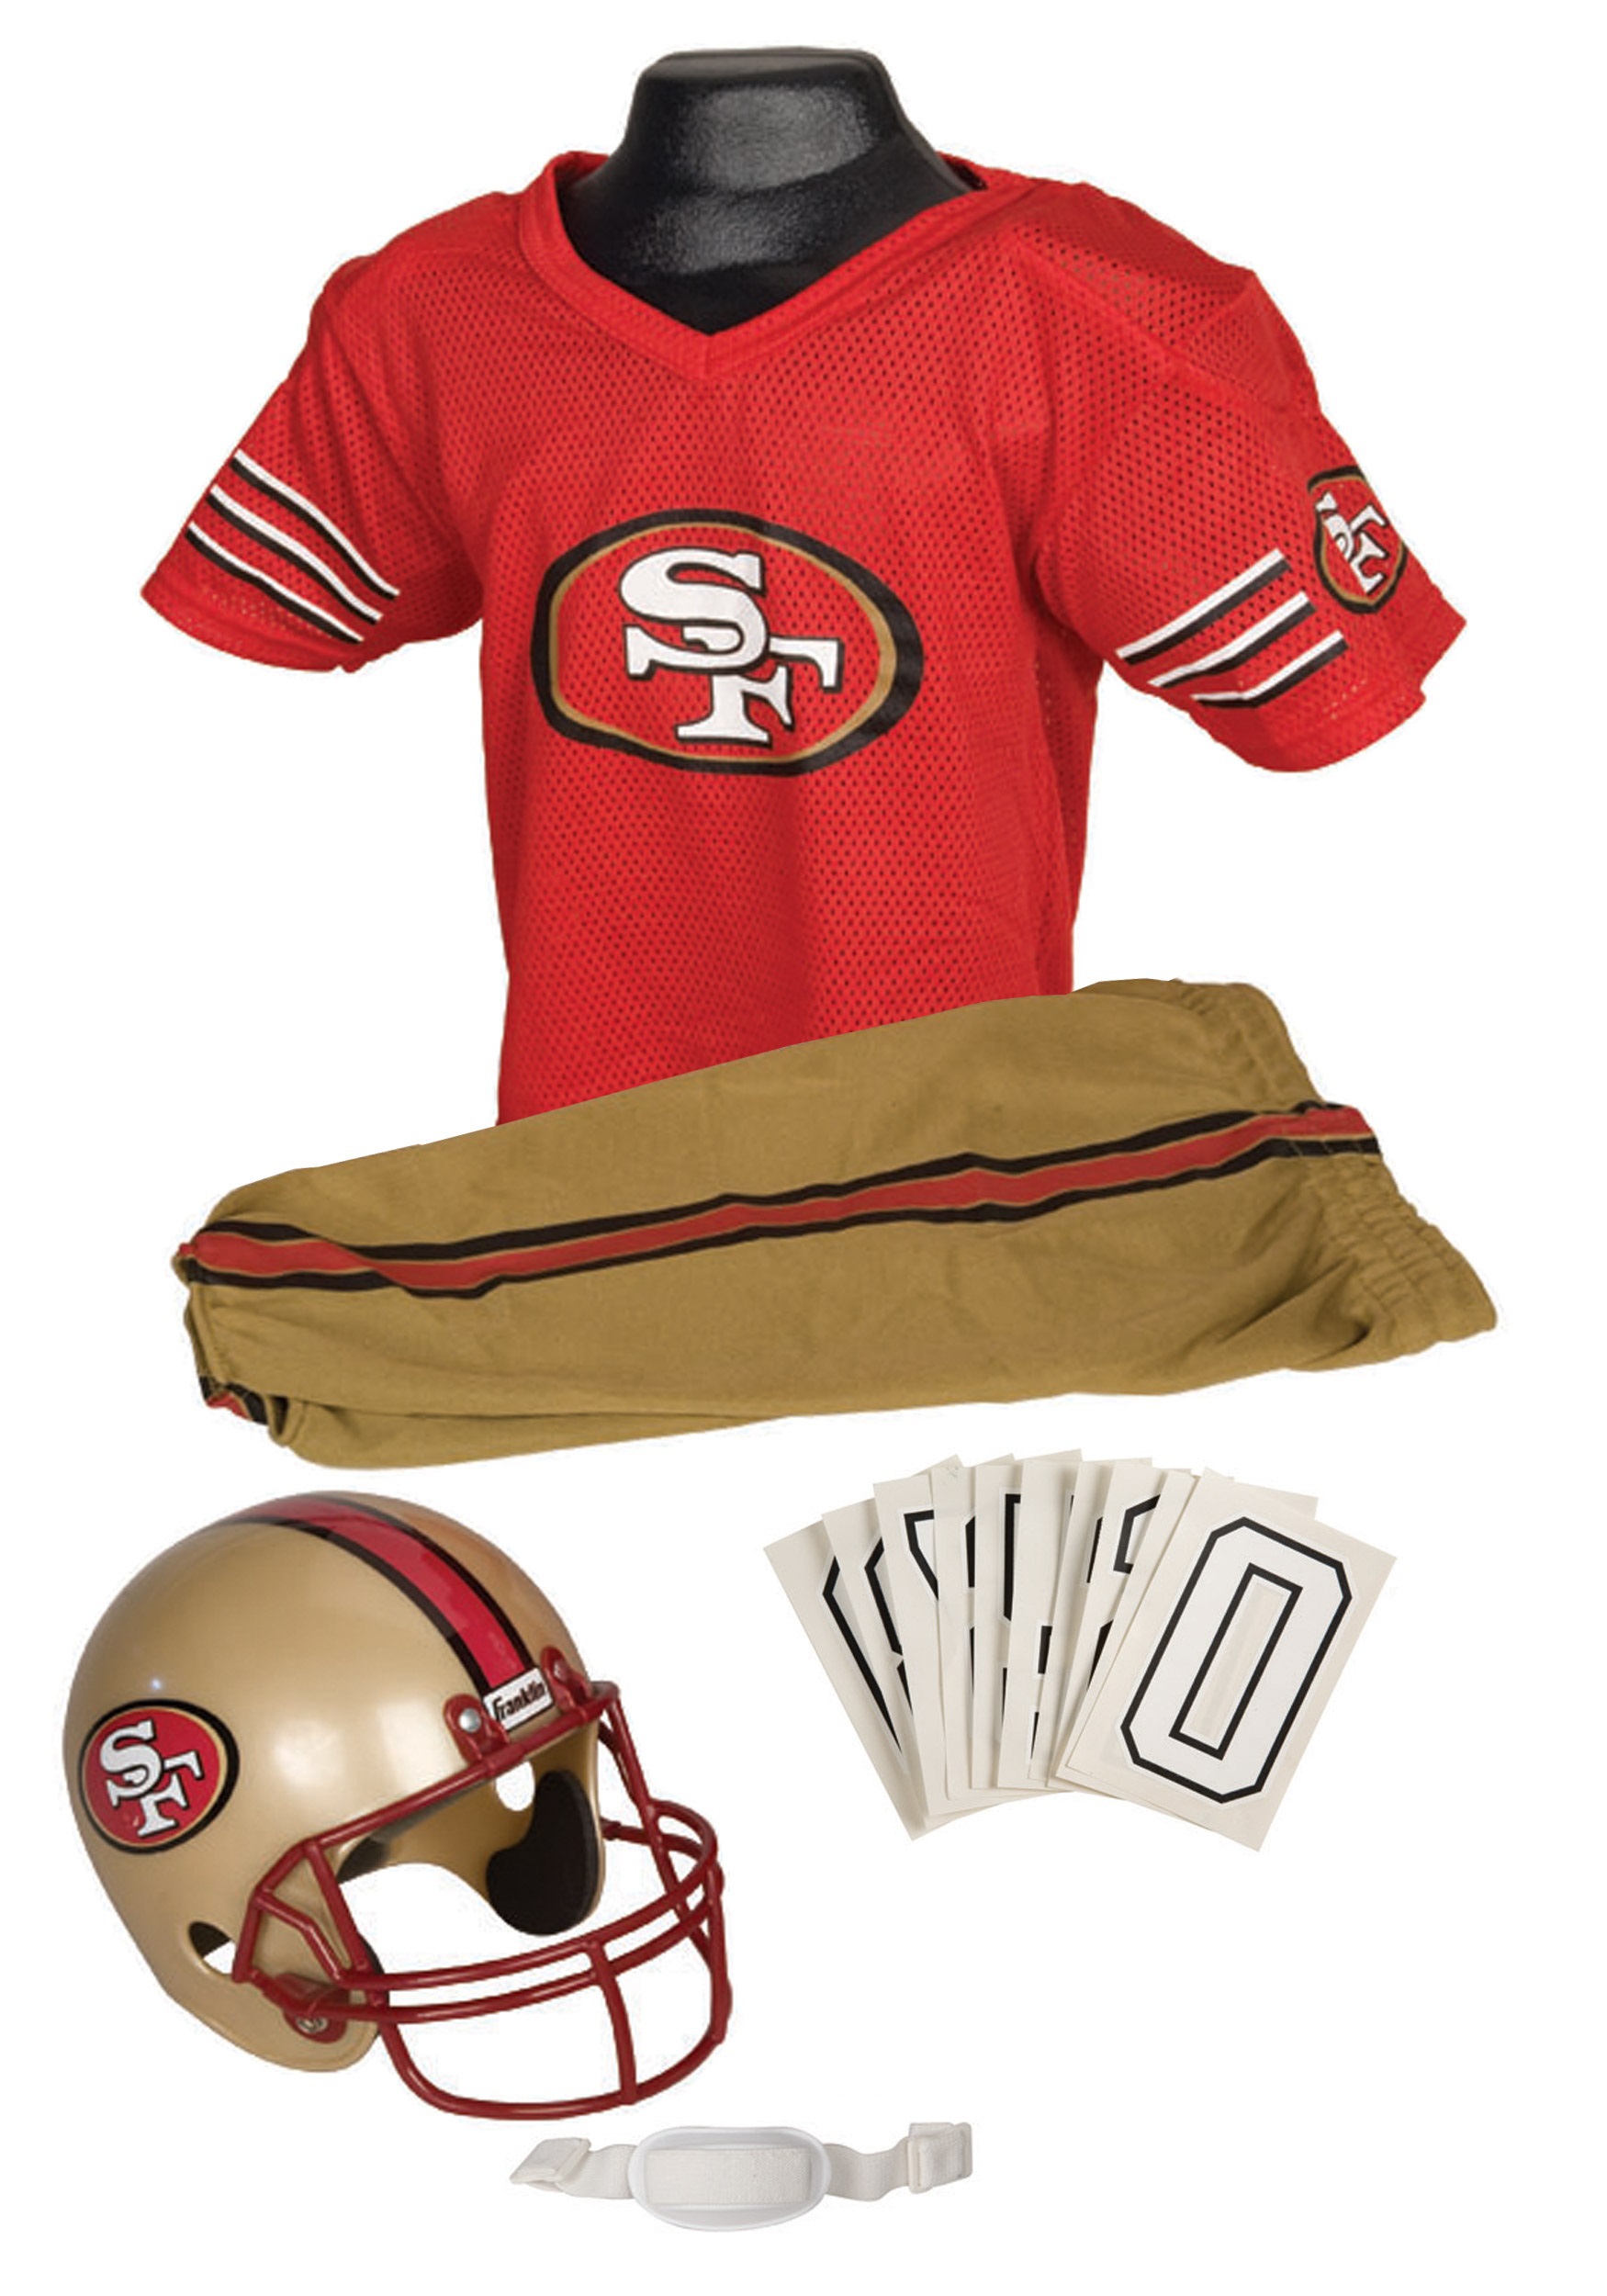 Kids NFL 49ers Uniform Costume